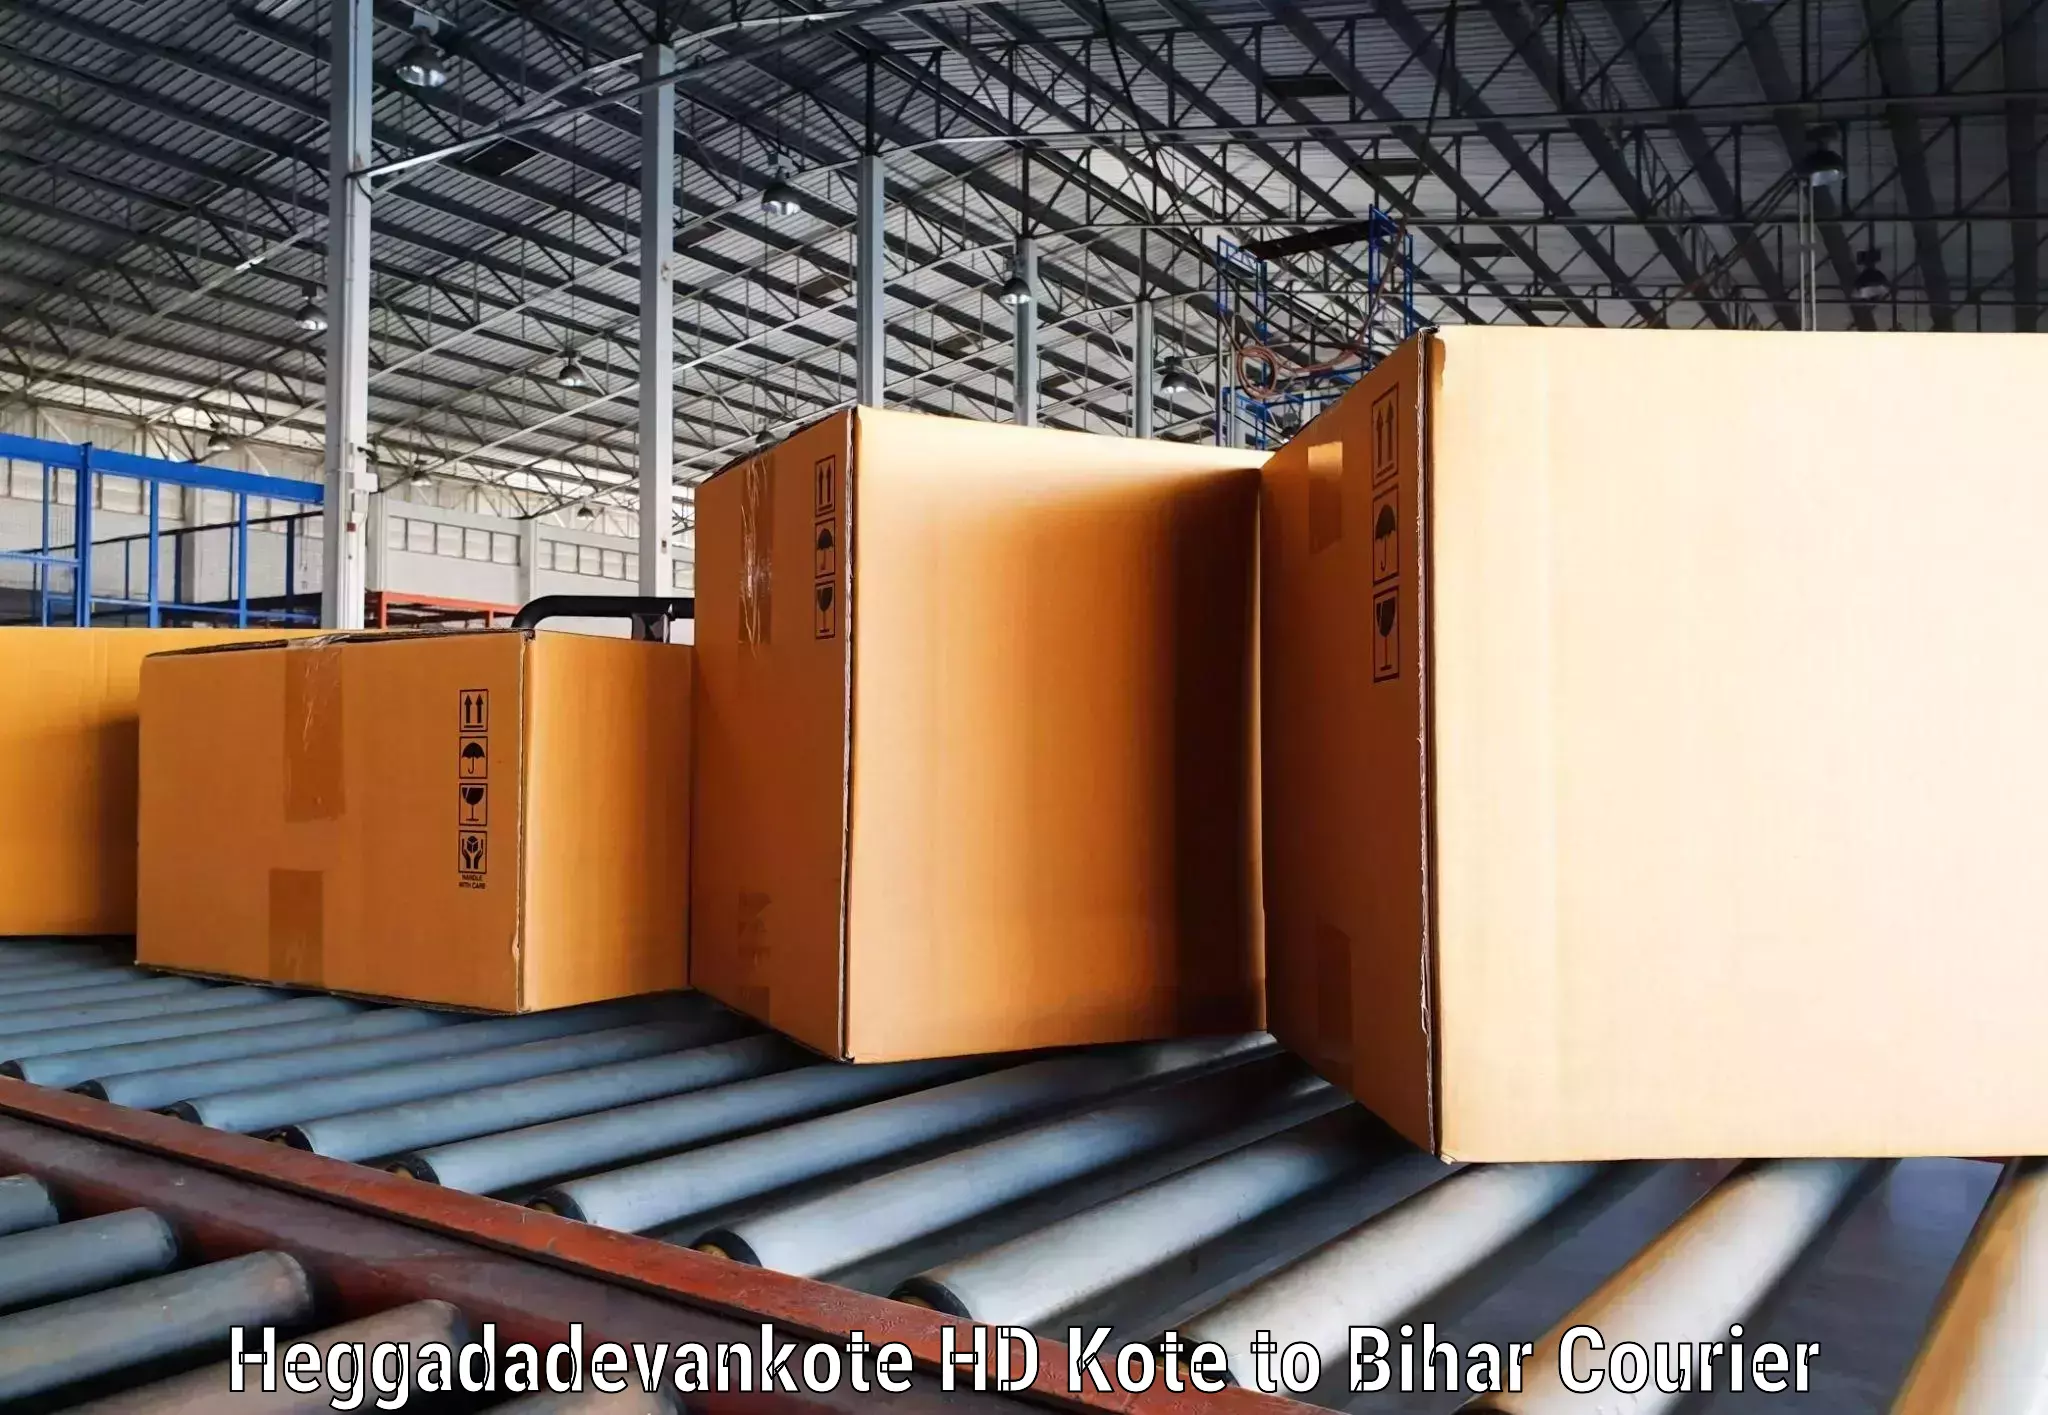 Dynamic courier operations Heggadadevankote HD Kote to Banka